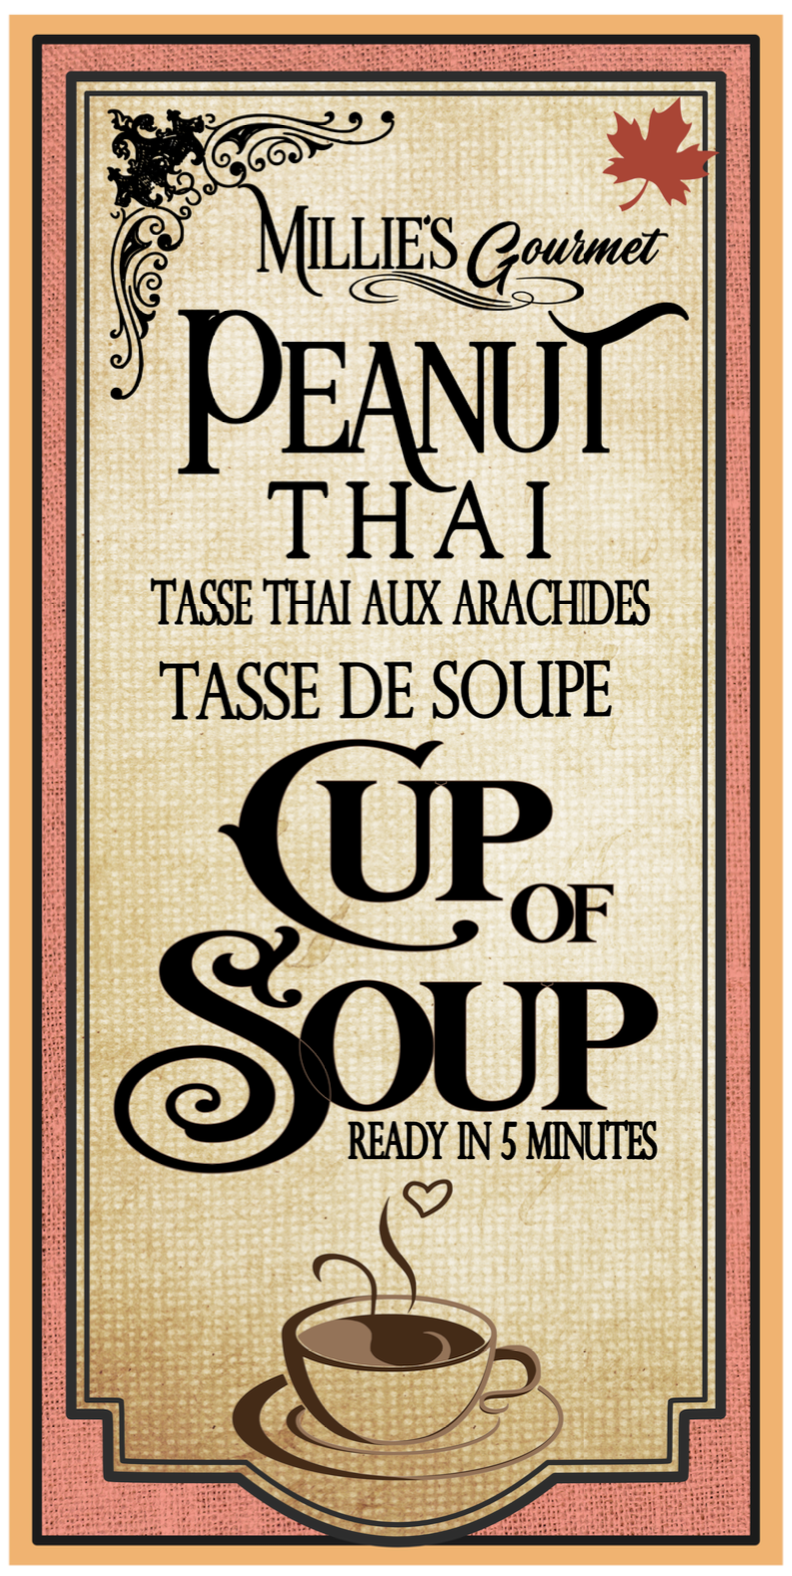 Peanut Thai Cup of Soup